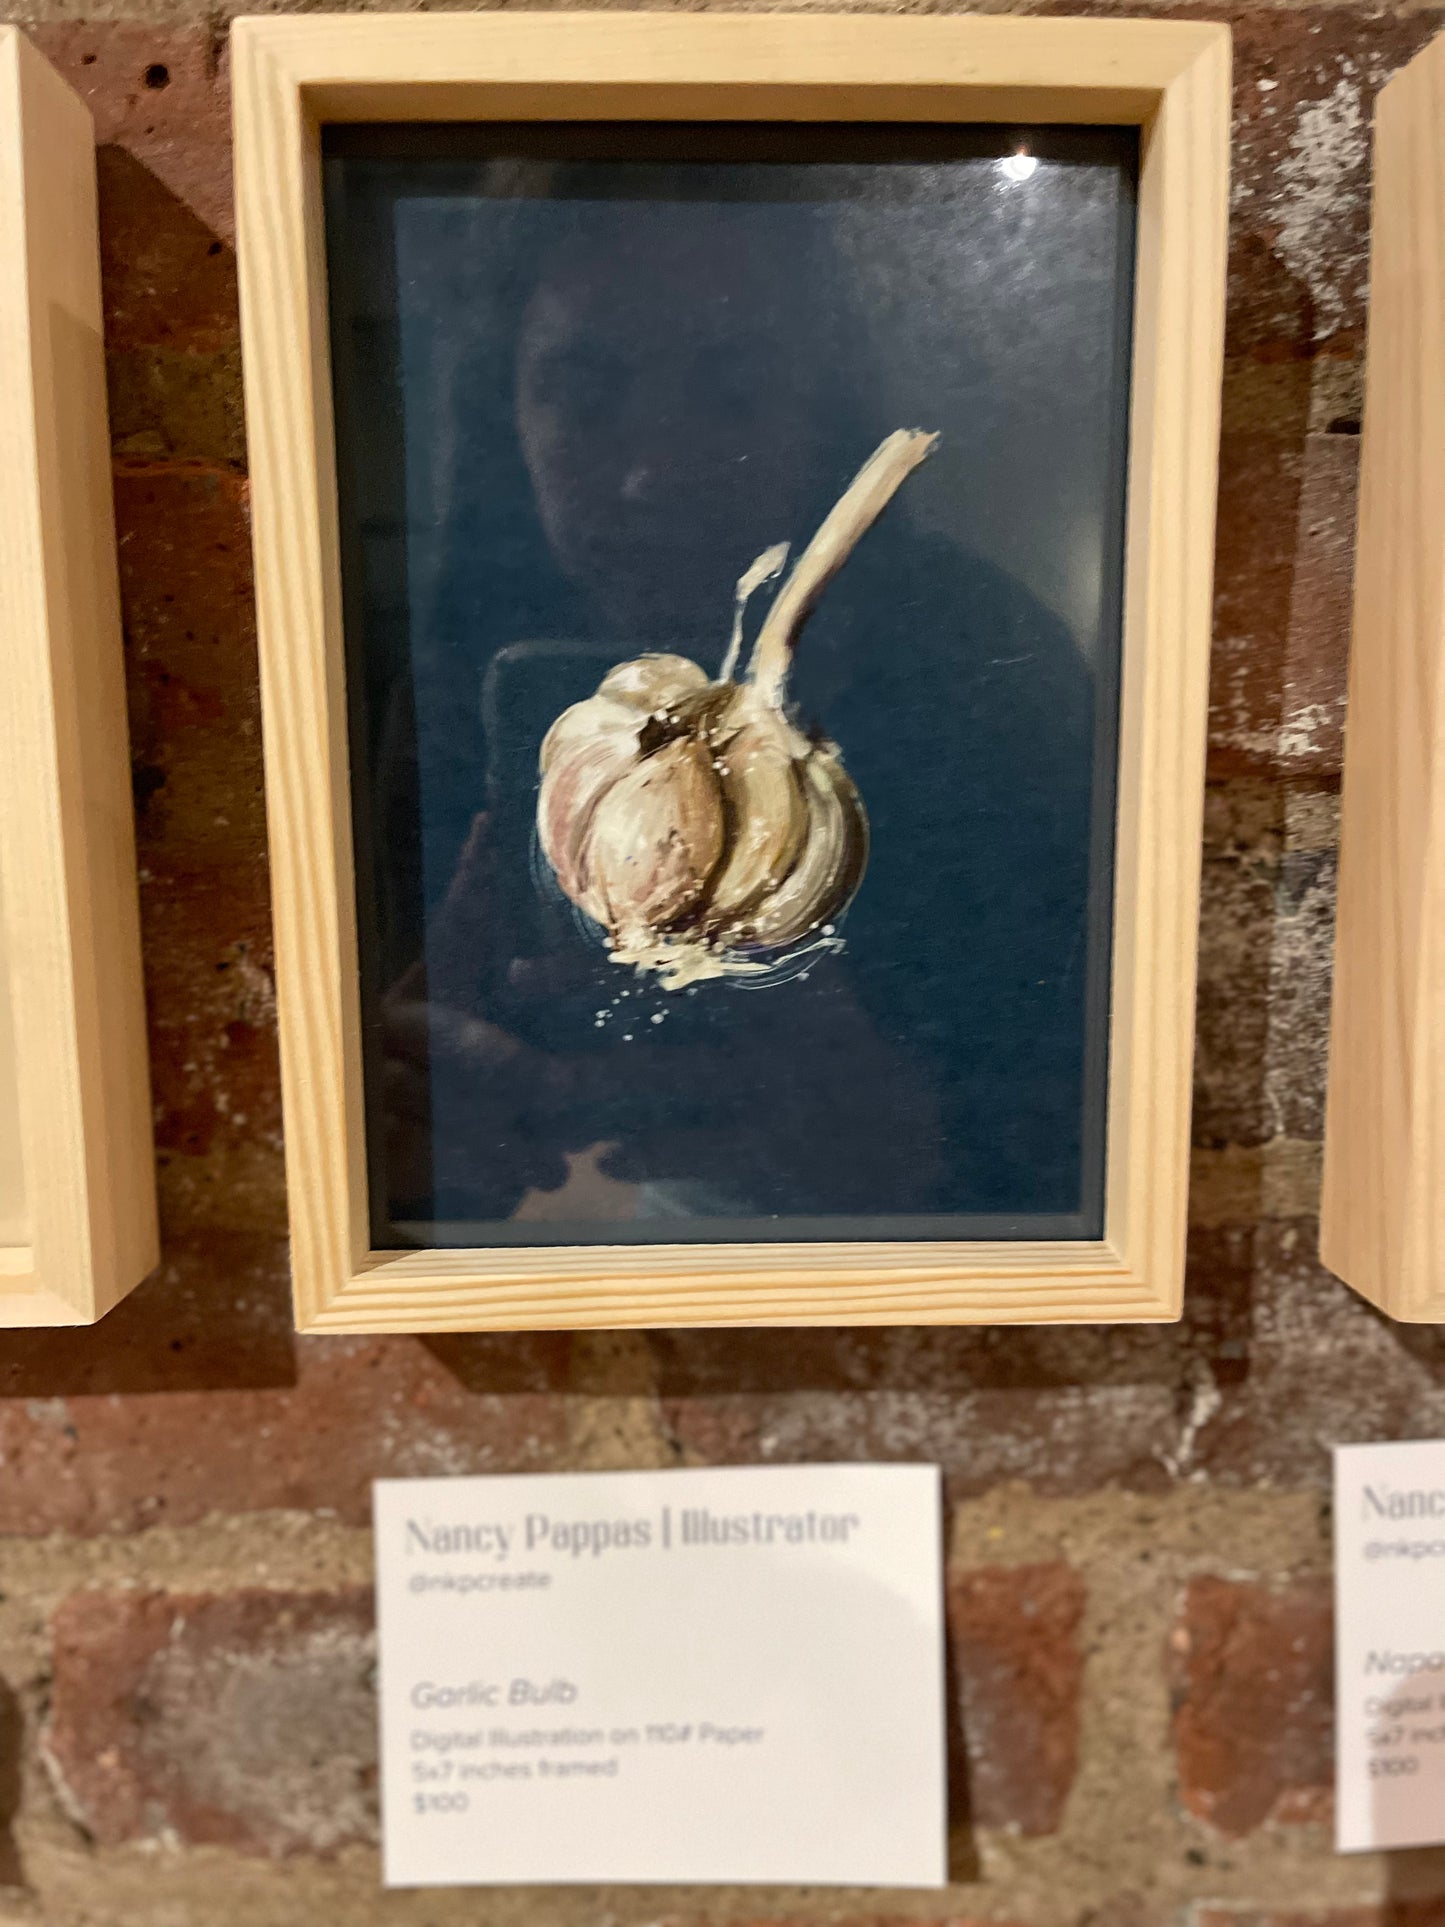 Garlic Bulb by Nancy Pappas